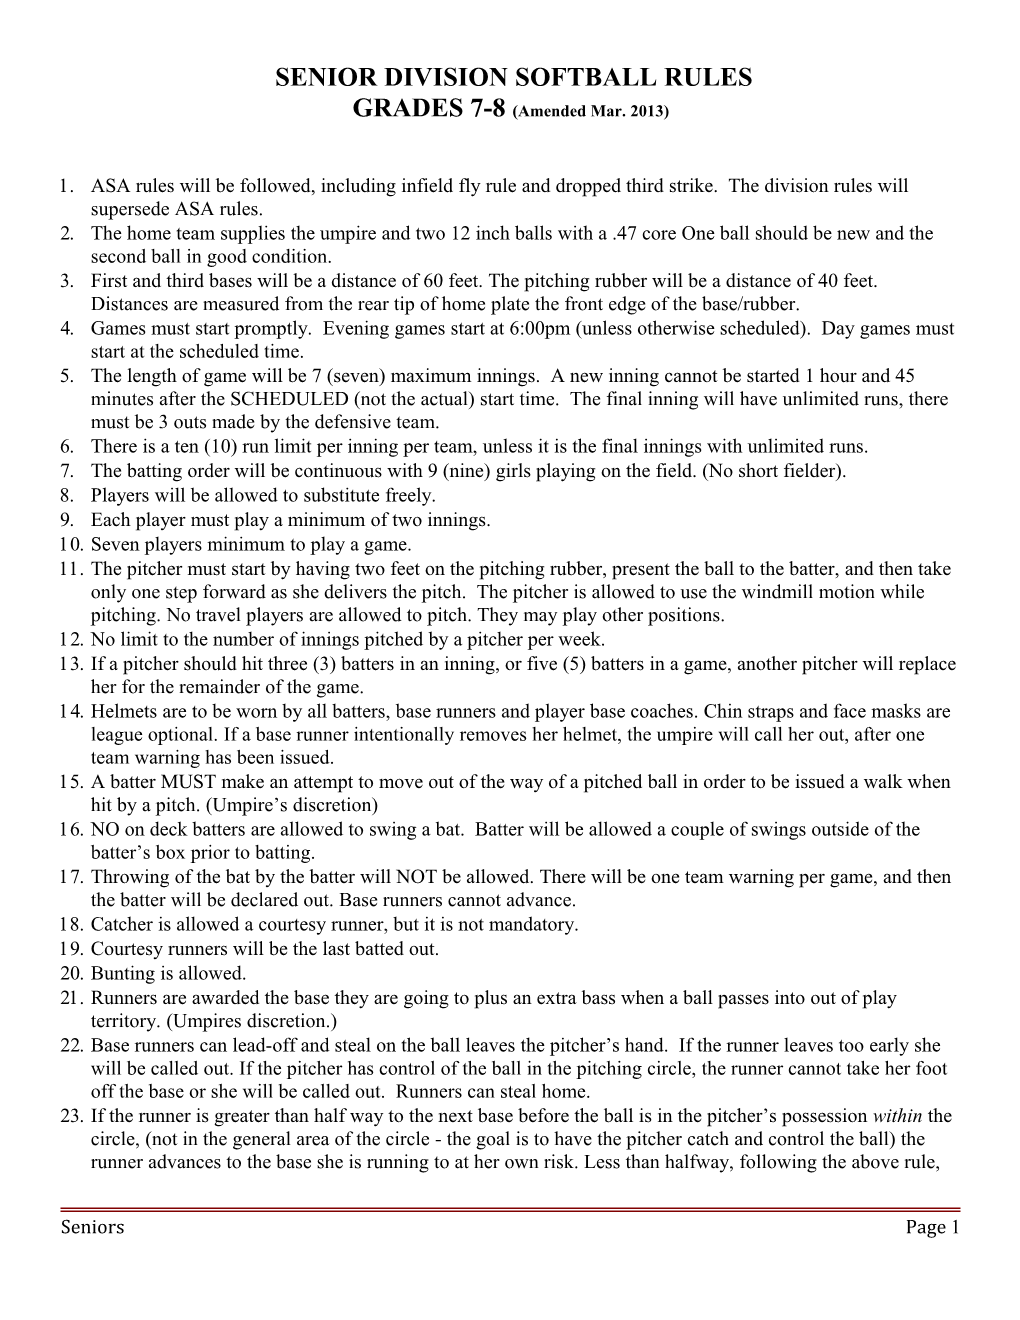 Intermediate Level Softball Rules 2004